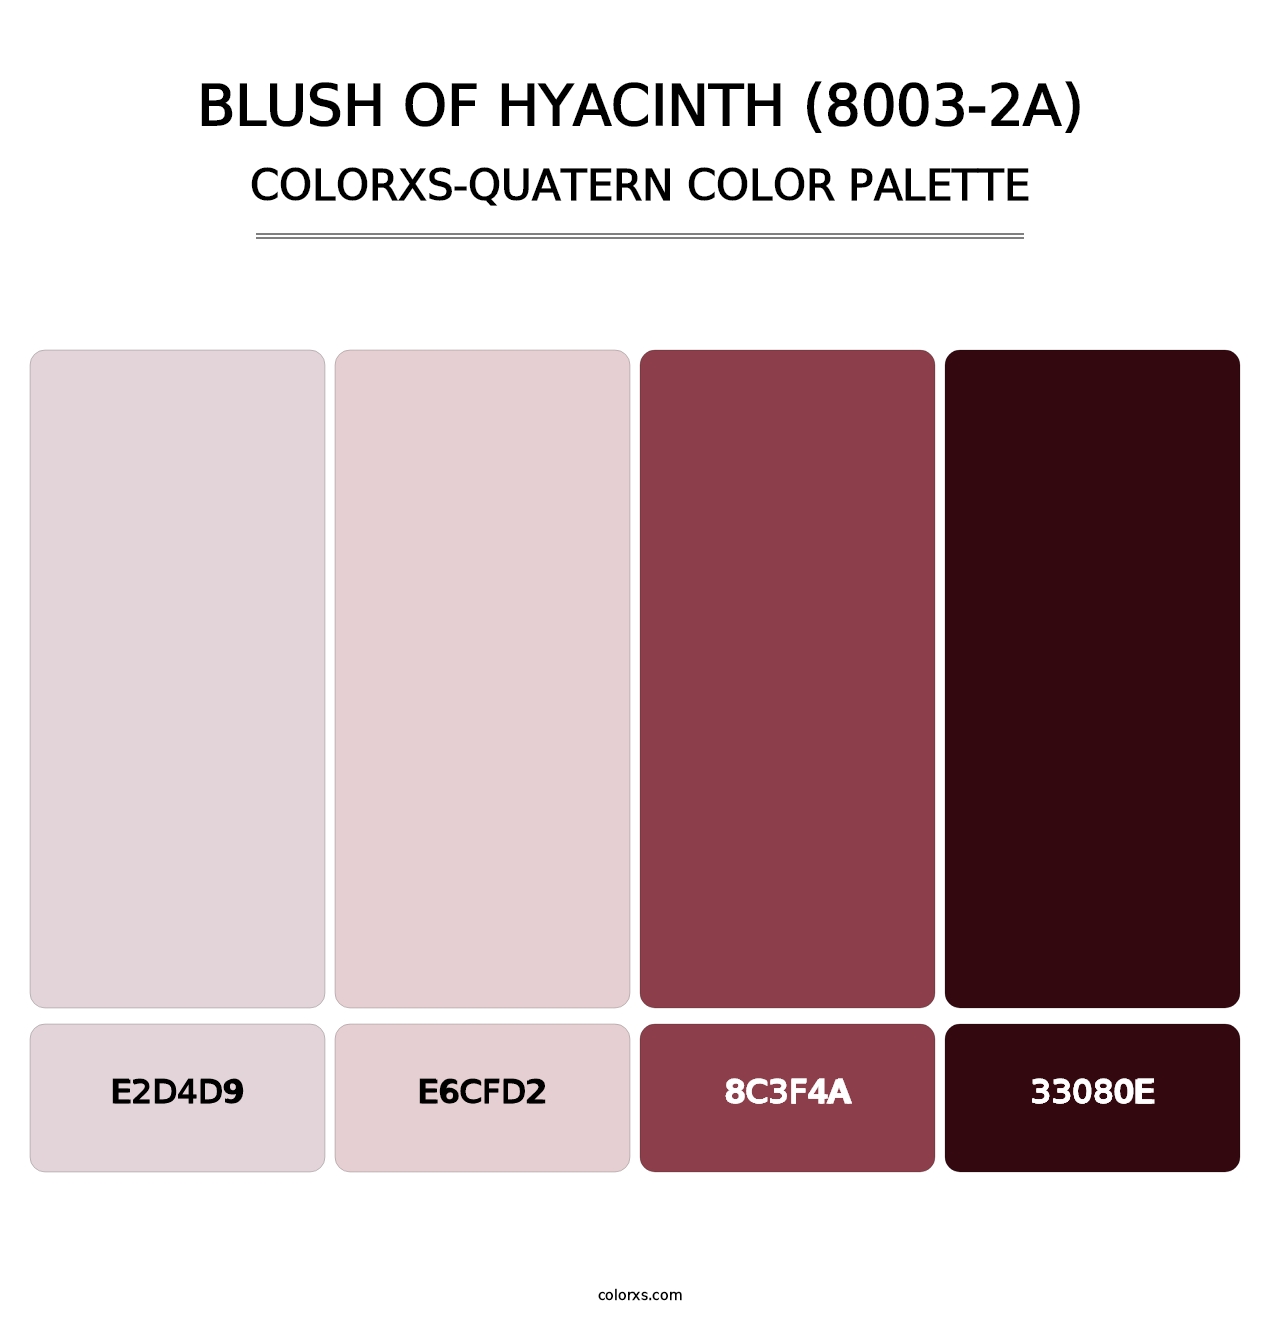 Blush of Hyacinth (8003-2A) - Colorxs Quatern Palette